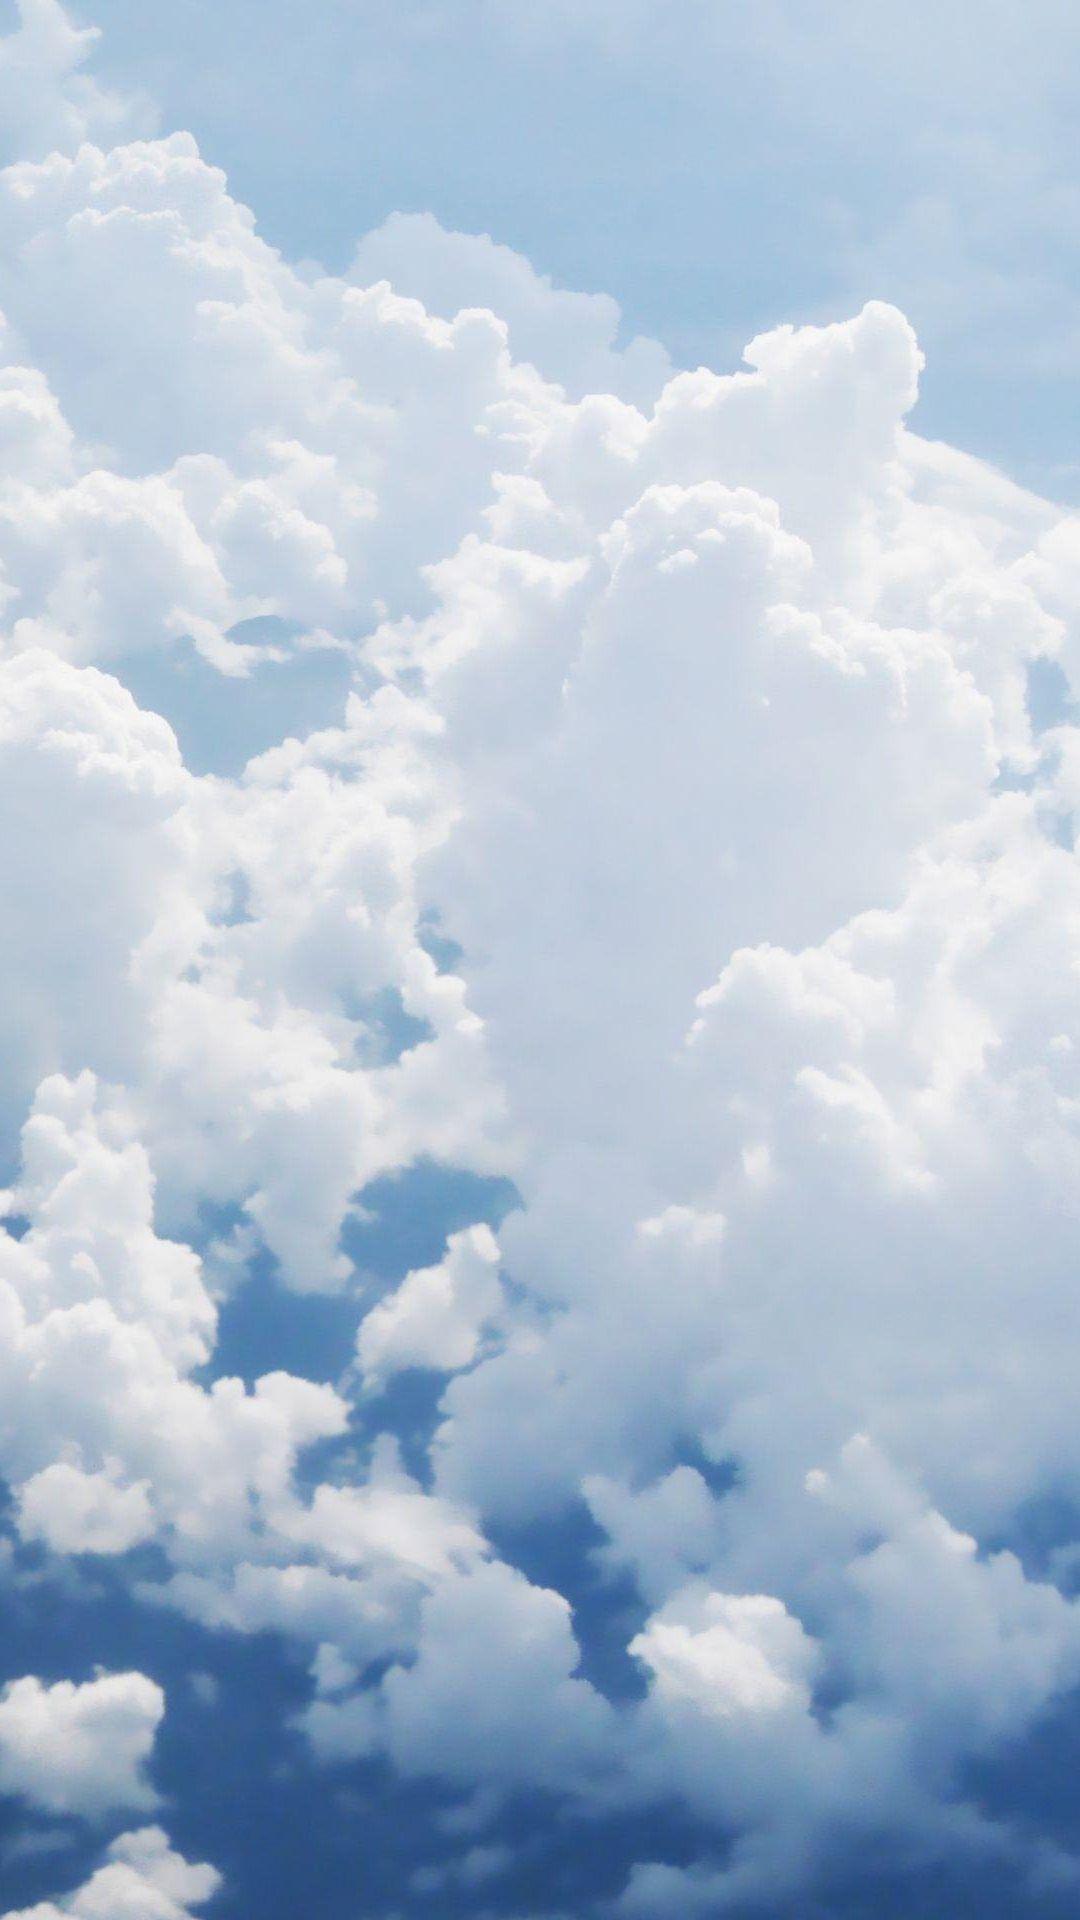 1080 x 1920 · jpeg - Blue Aesthetic Cloud Wallpapers - Top Free Blue Aesthetic Cloud ...